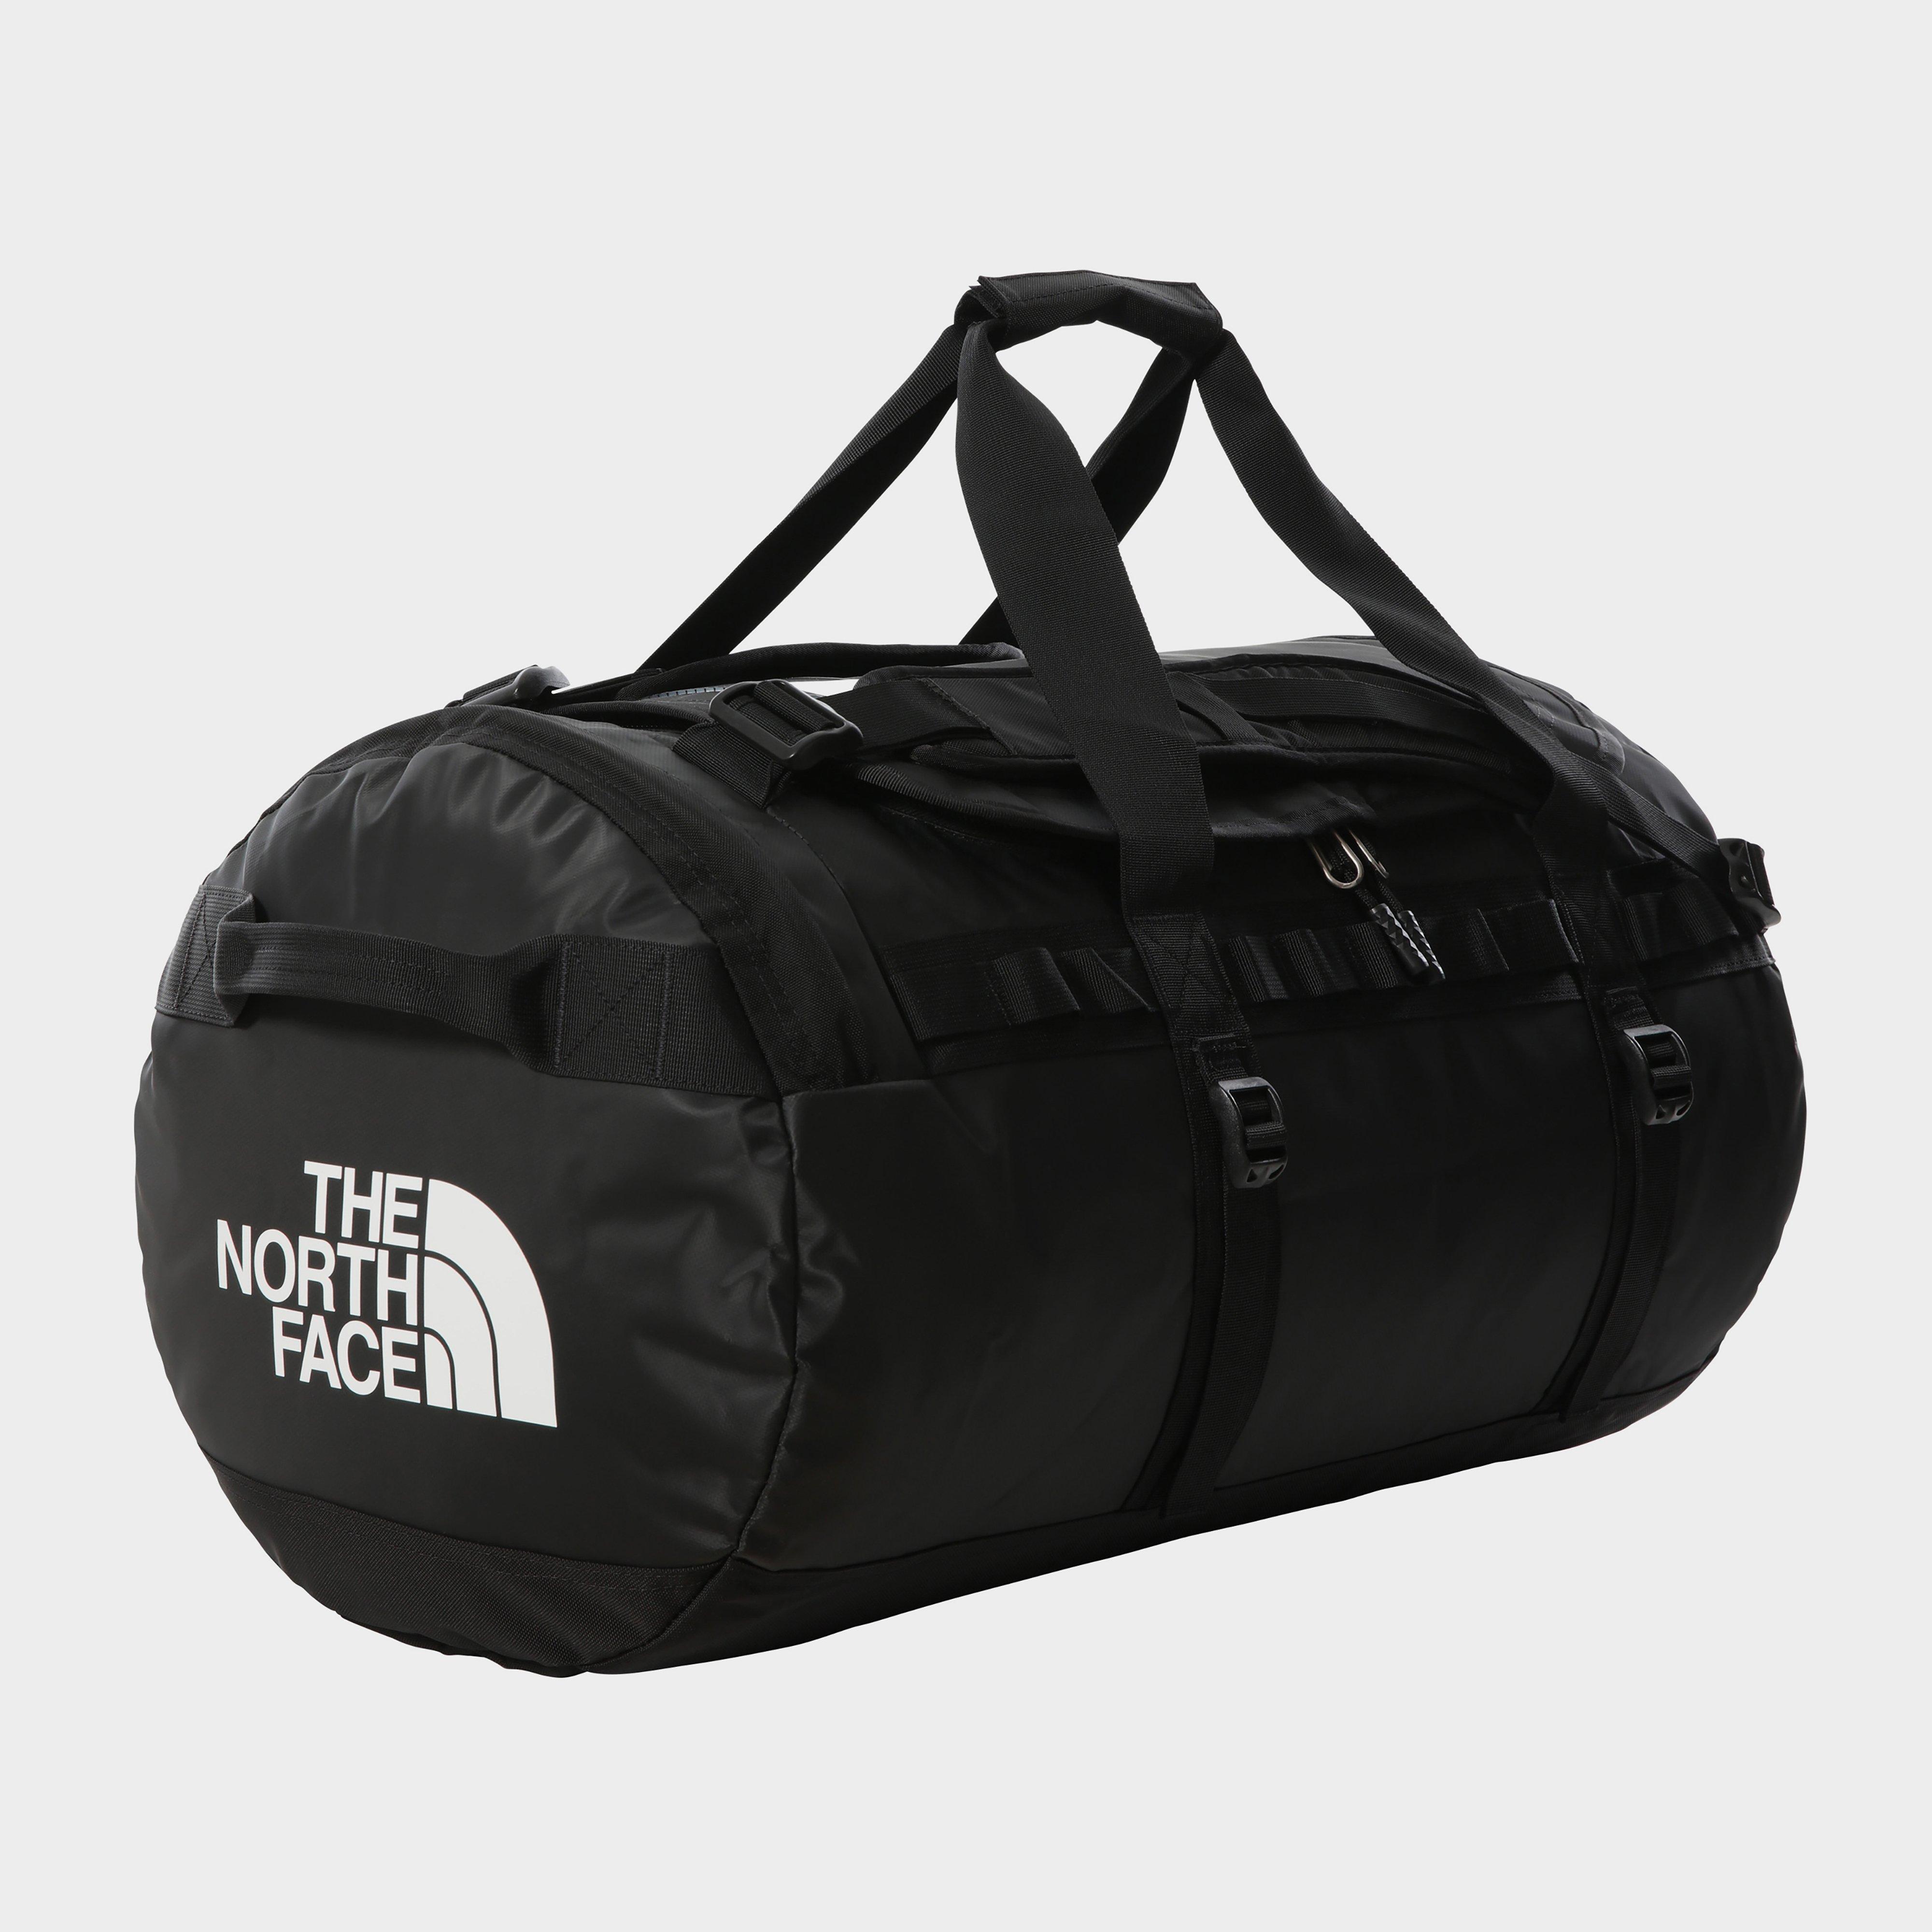 The North Face The North Face Basecamp Duffel Bag (Medium) - Black, Black